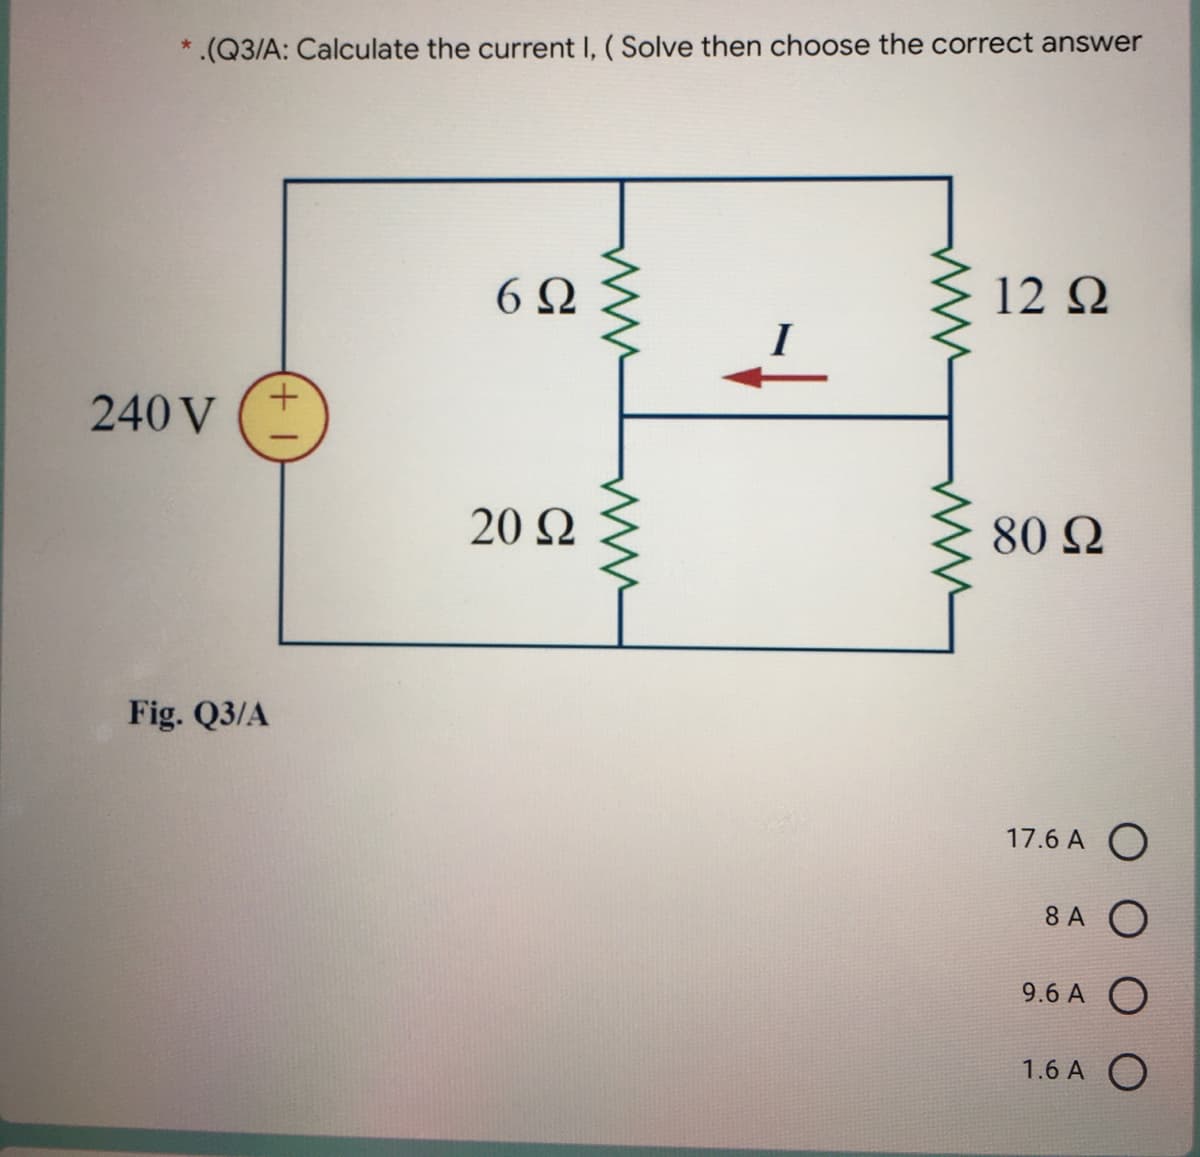 *.(Q3/A: Calculate the current I, ( Solve then choose the correct answer
6Ω
12 2
+.
240 V
20 Ω
80 Q
Fig. Q3/A
17.6 A O
8 A O
9.6 A O
1.6 A O
